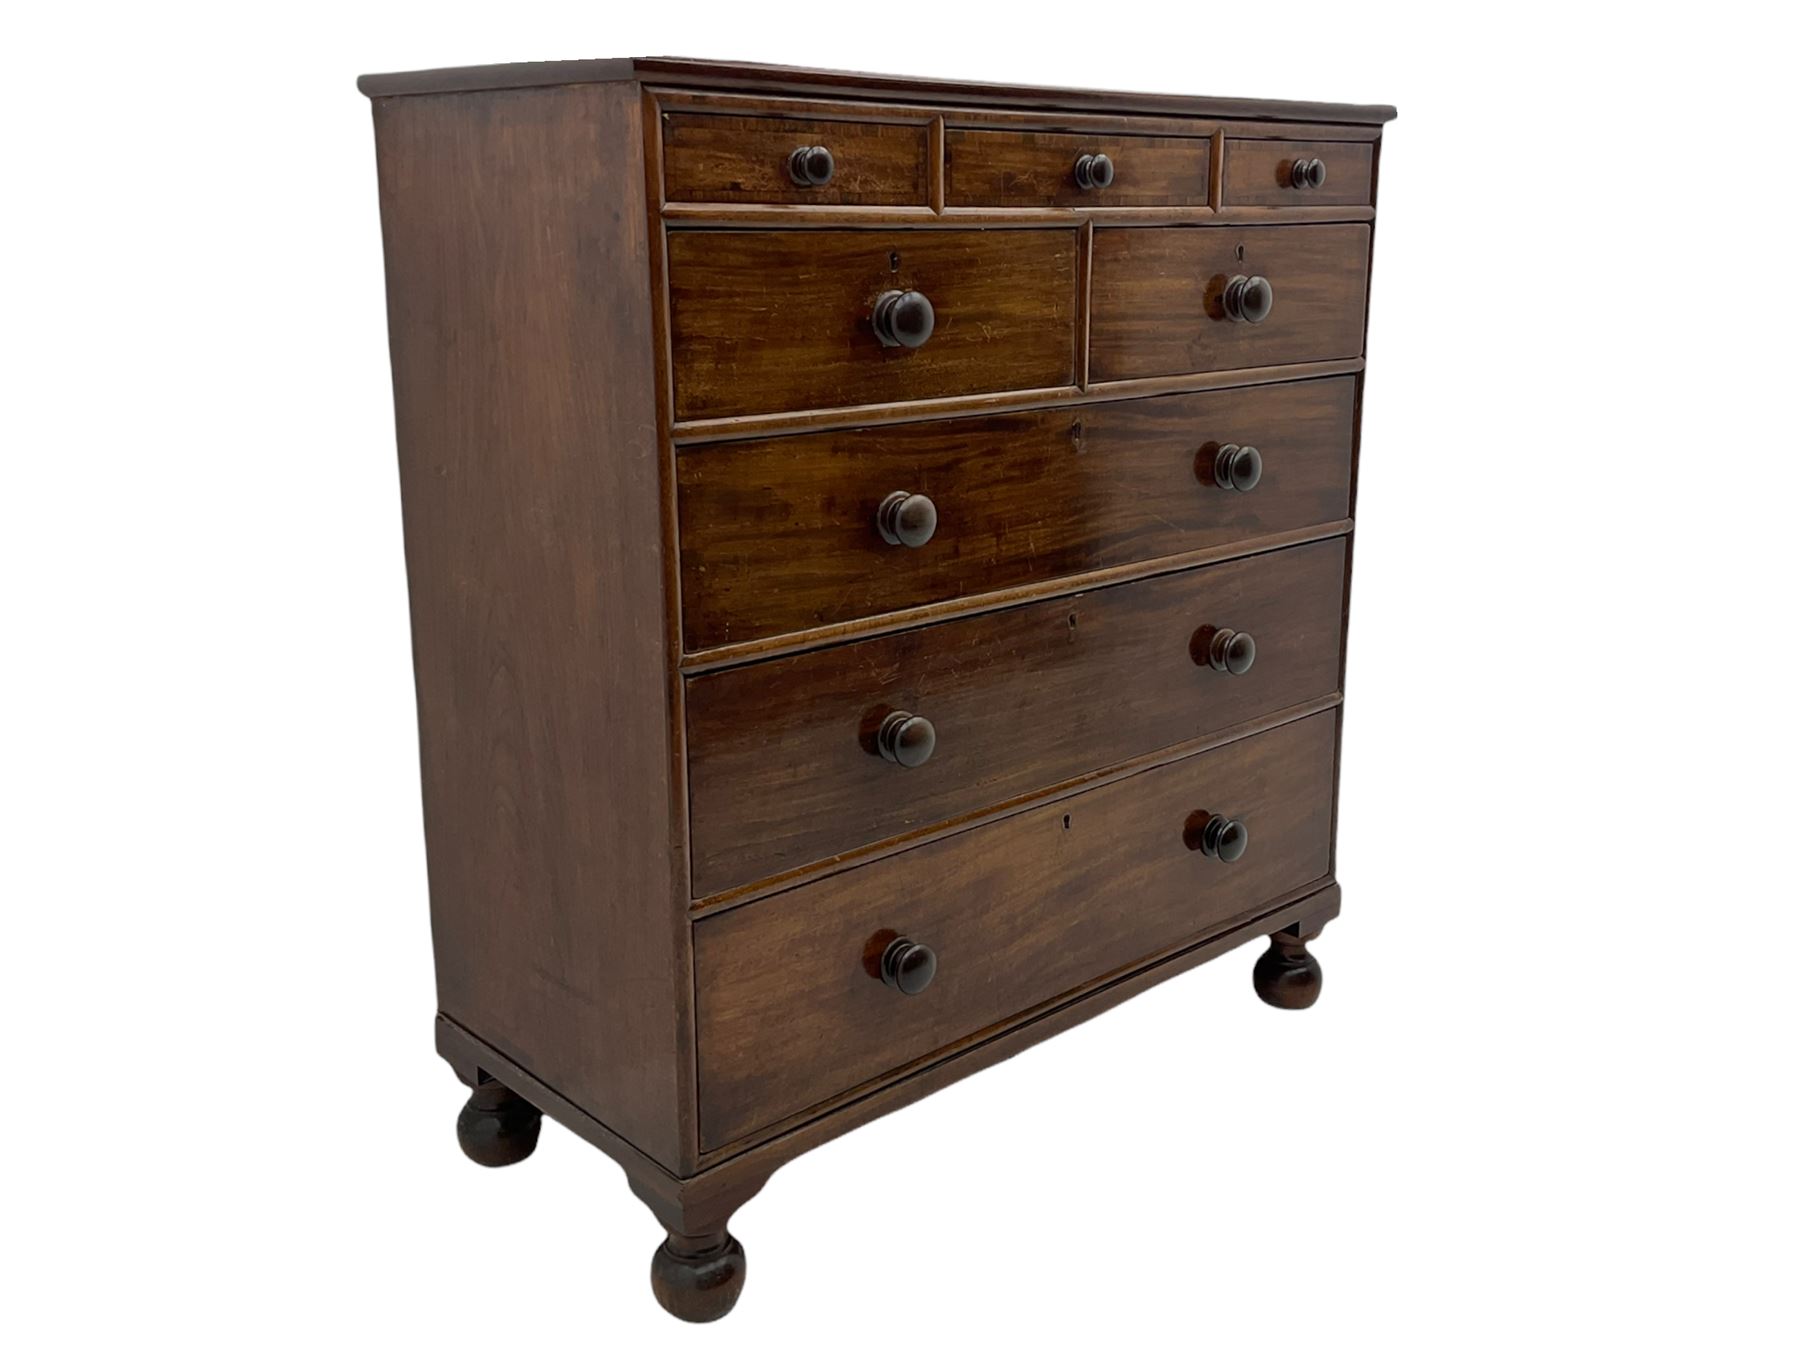 19th century mahogany chest - Image 3 of 14